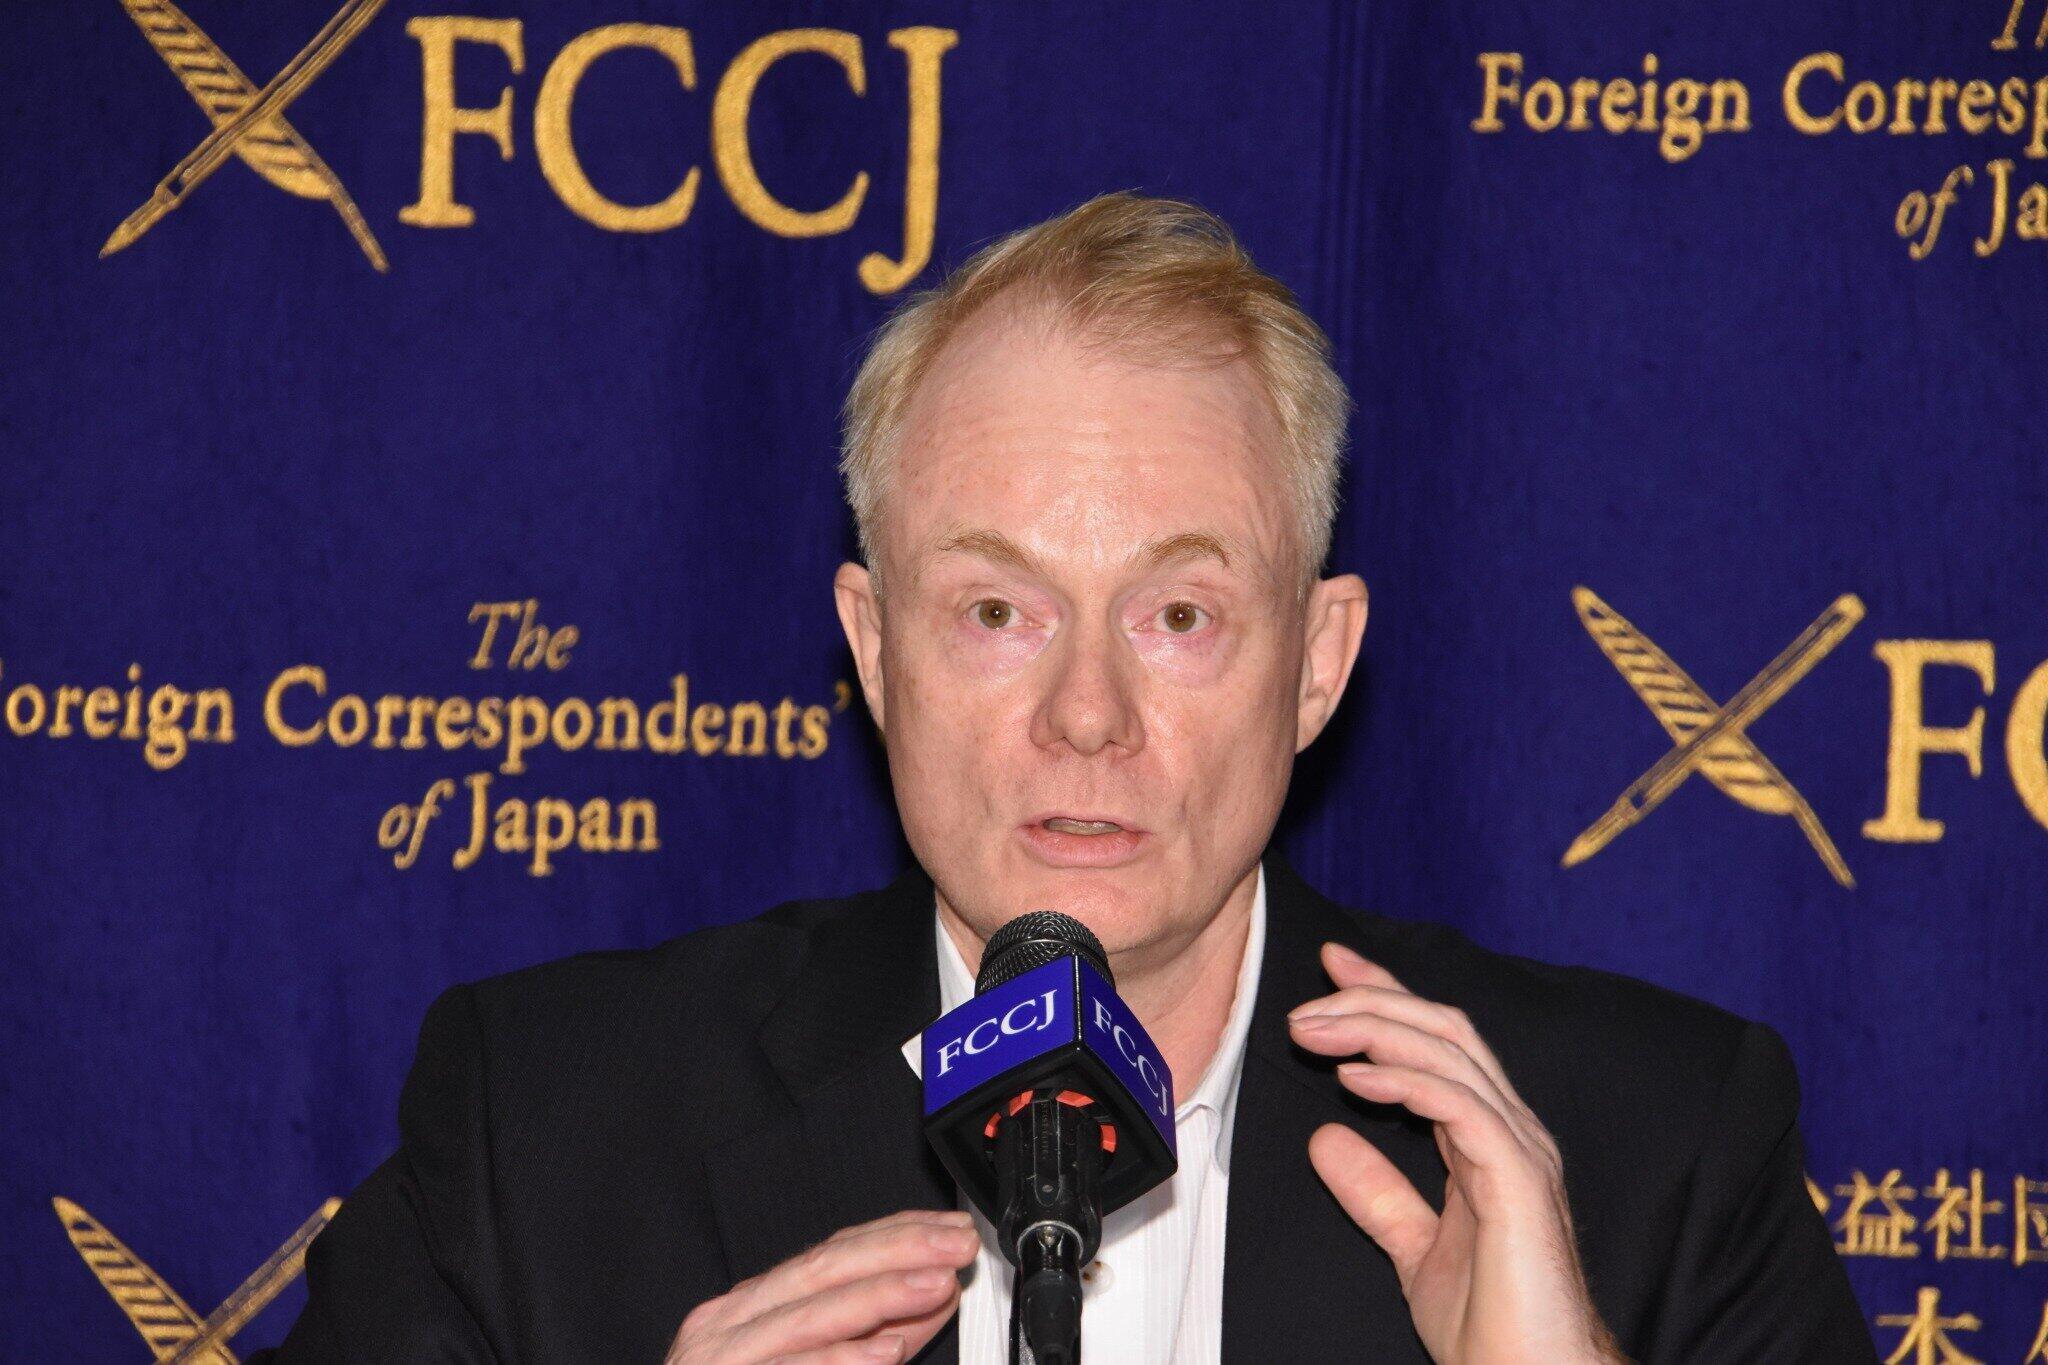 PRコンサルティング会社の「ケクストCNC（Kekst CNC）」が行った国際世論調査の結果について説明する日本最高責任者のヨッヘン・レゲヴィー氏（c）日本外国特派員協会